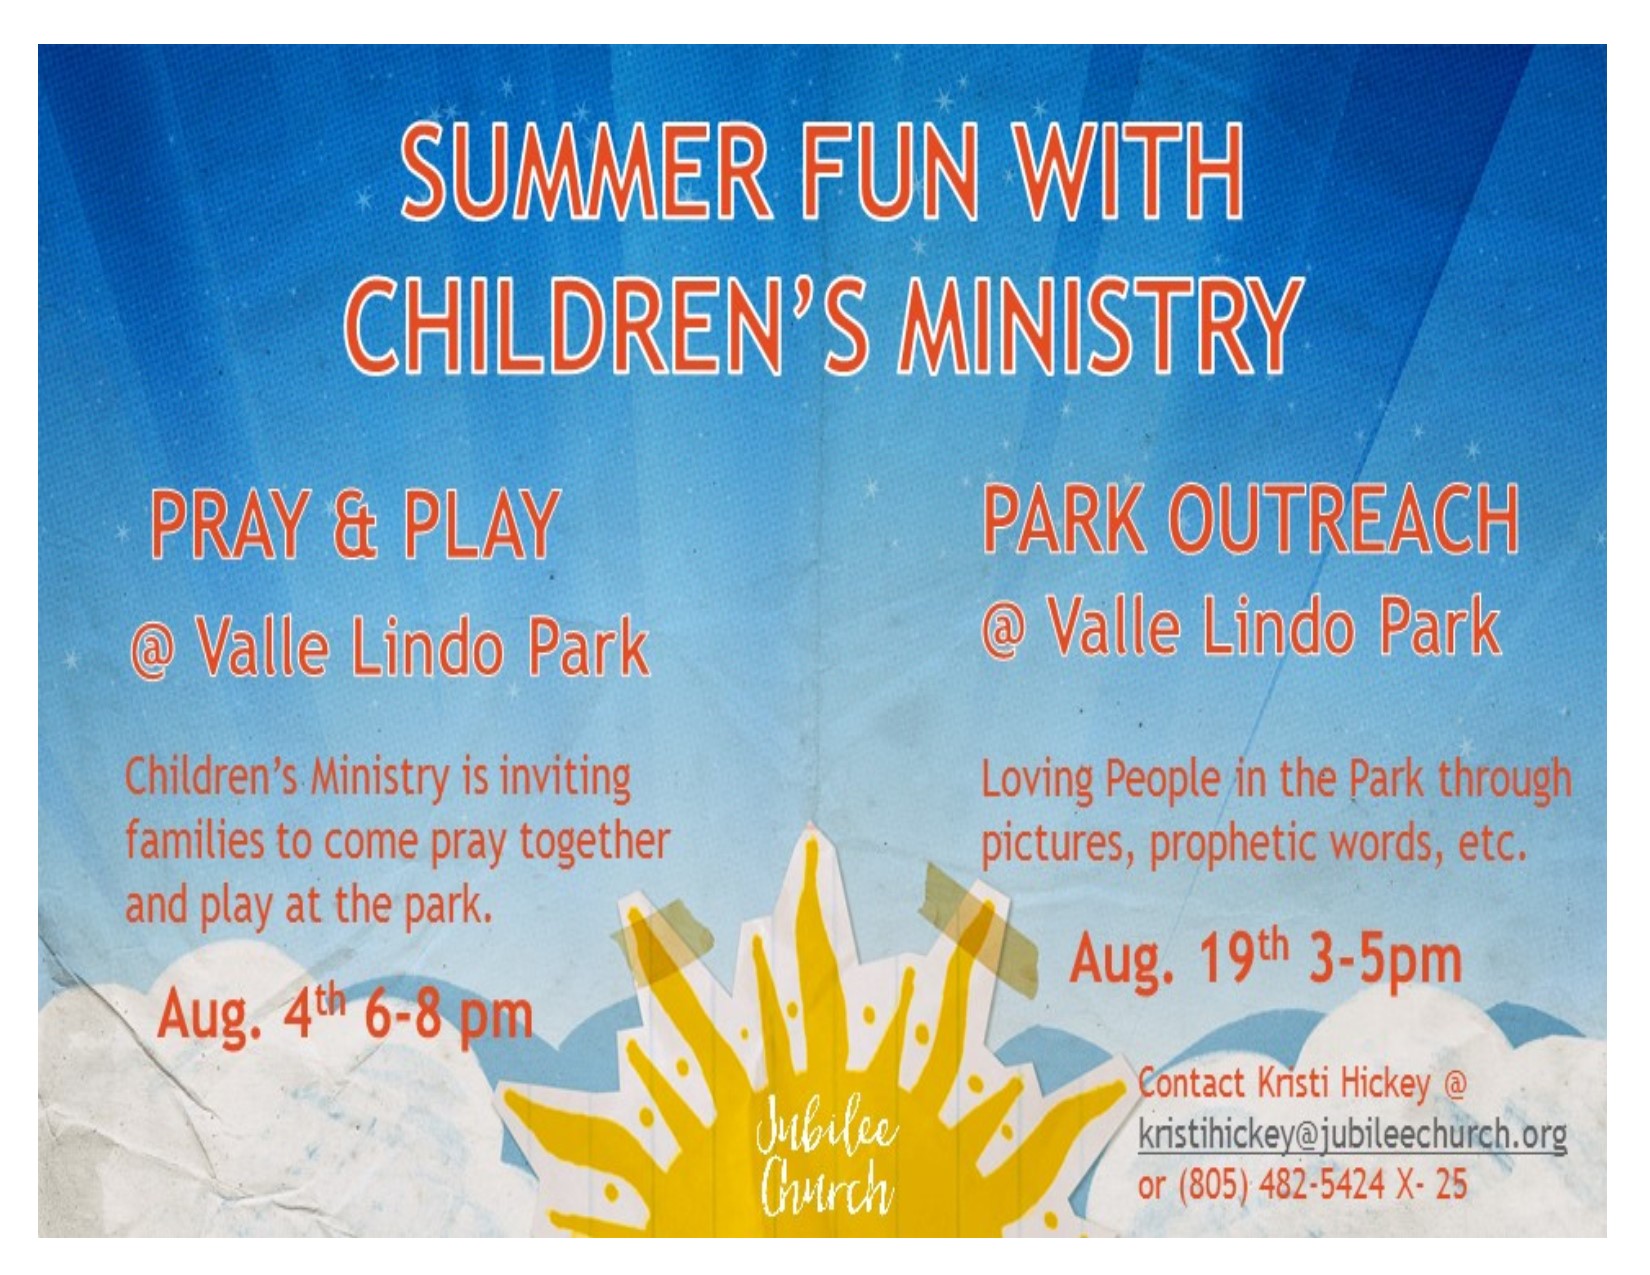 Children’s Ministry Park Outreach